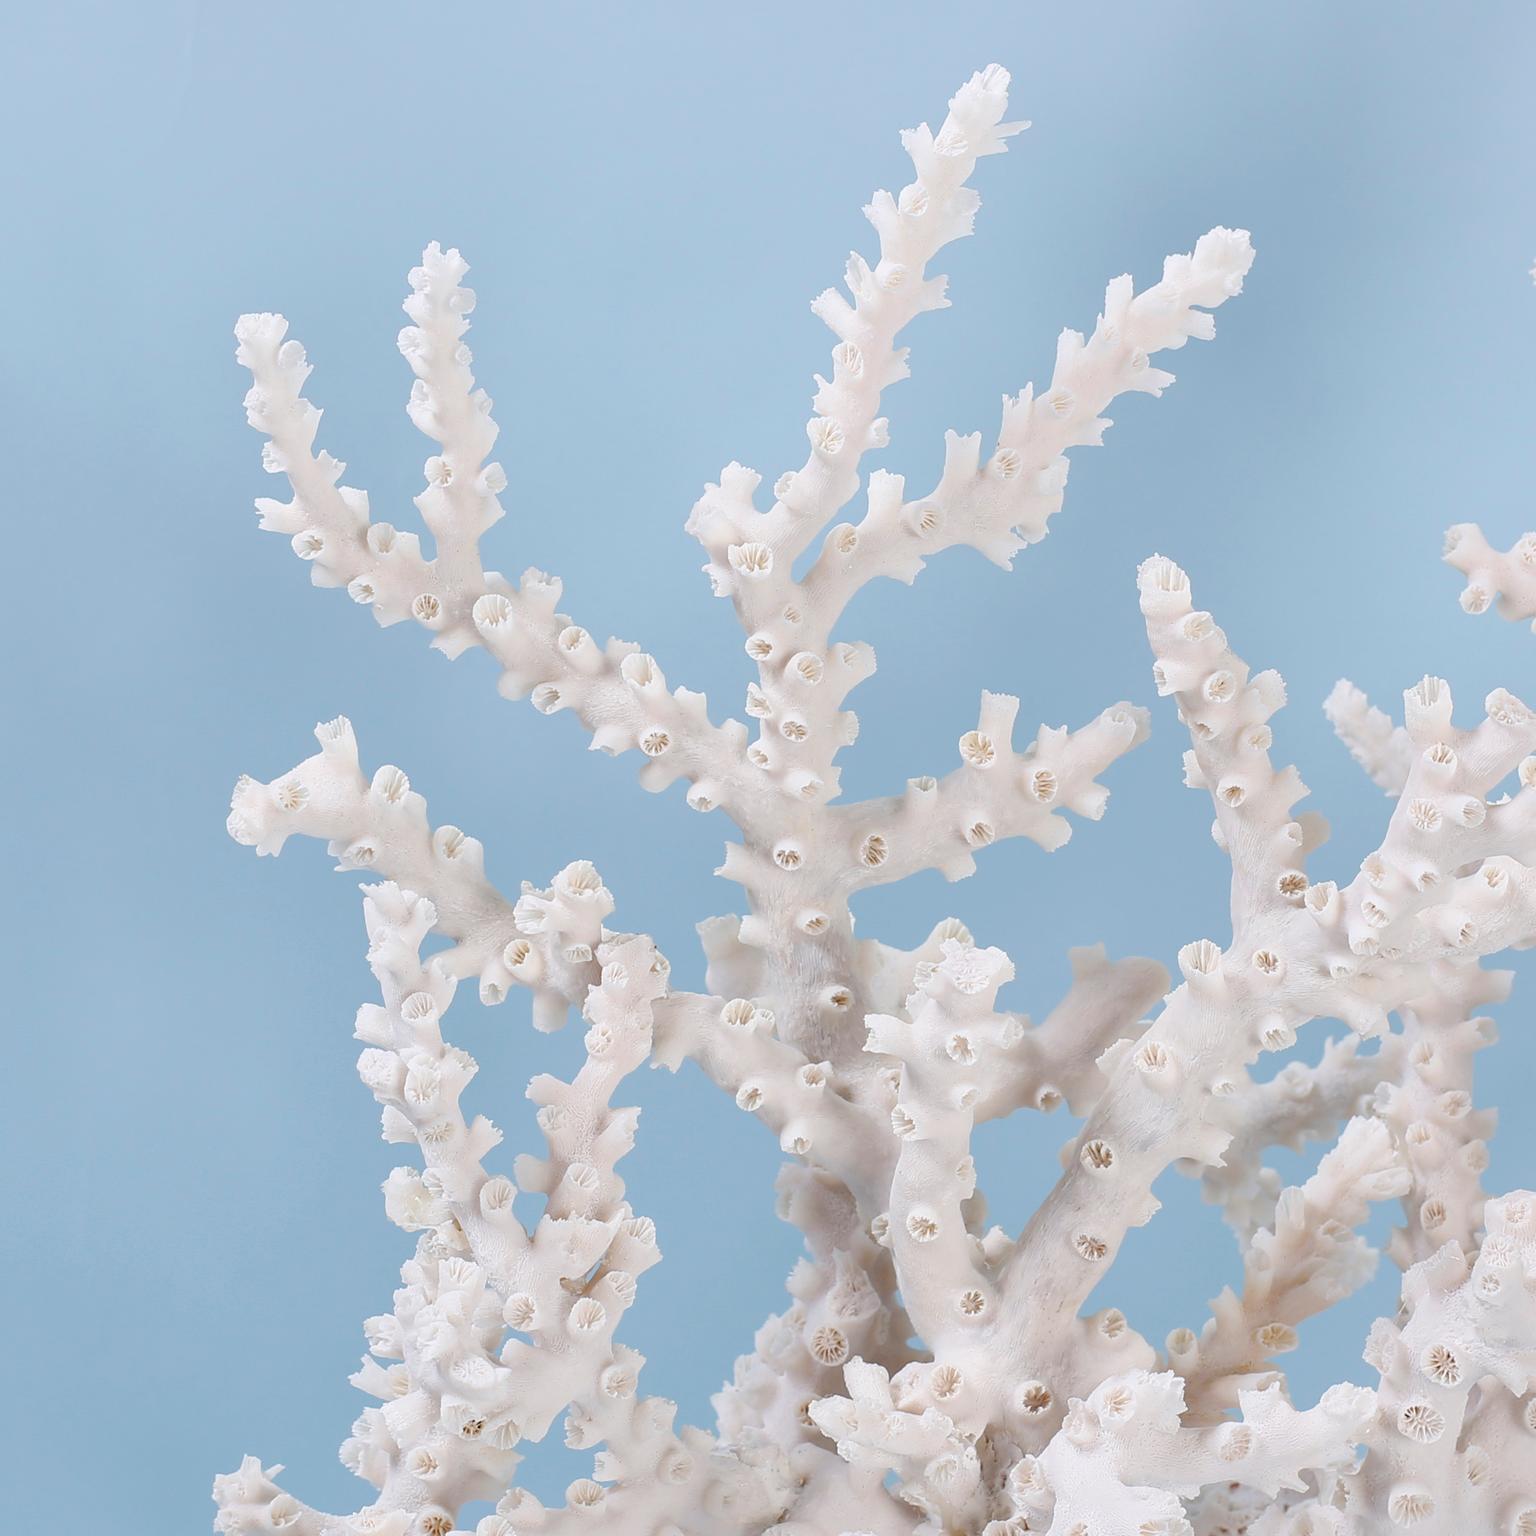 coral specimens for sale